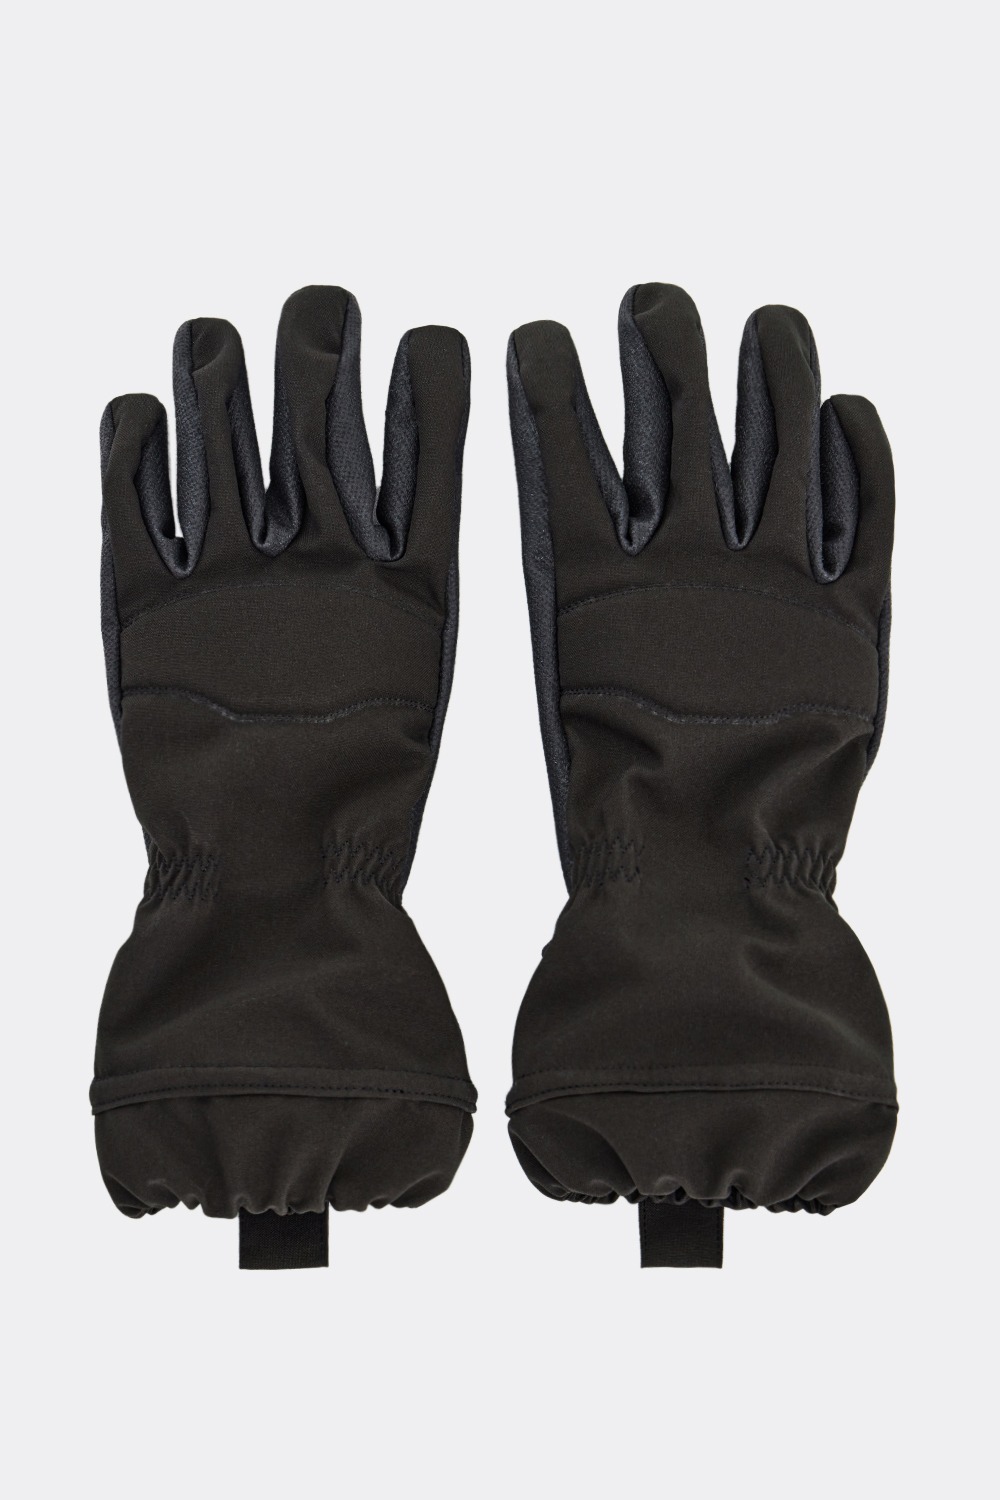 Eska® Gloves - Dark Soil Grey